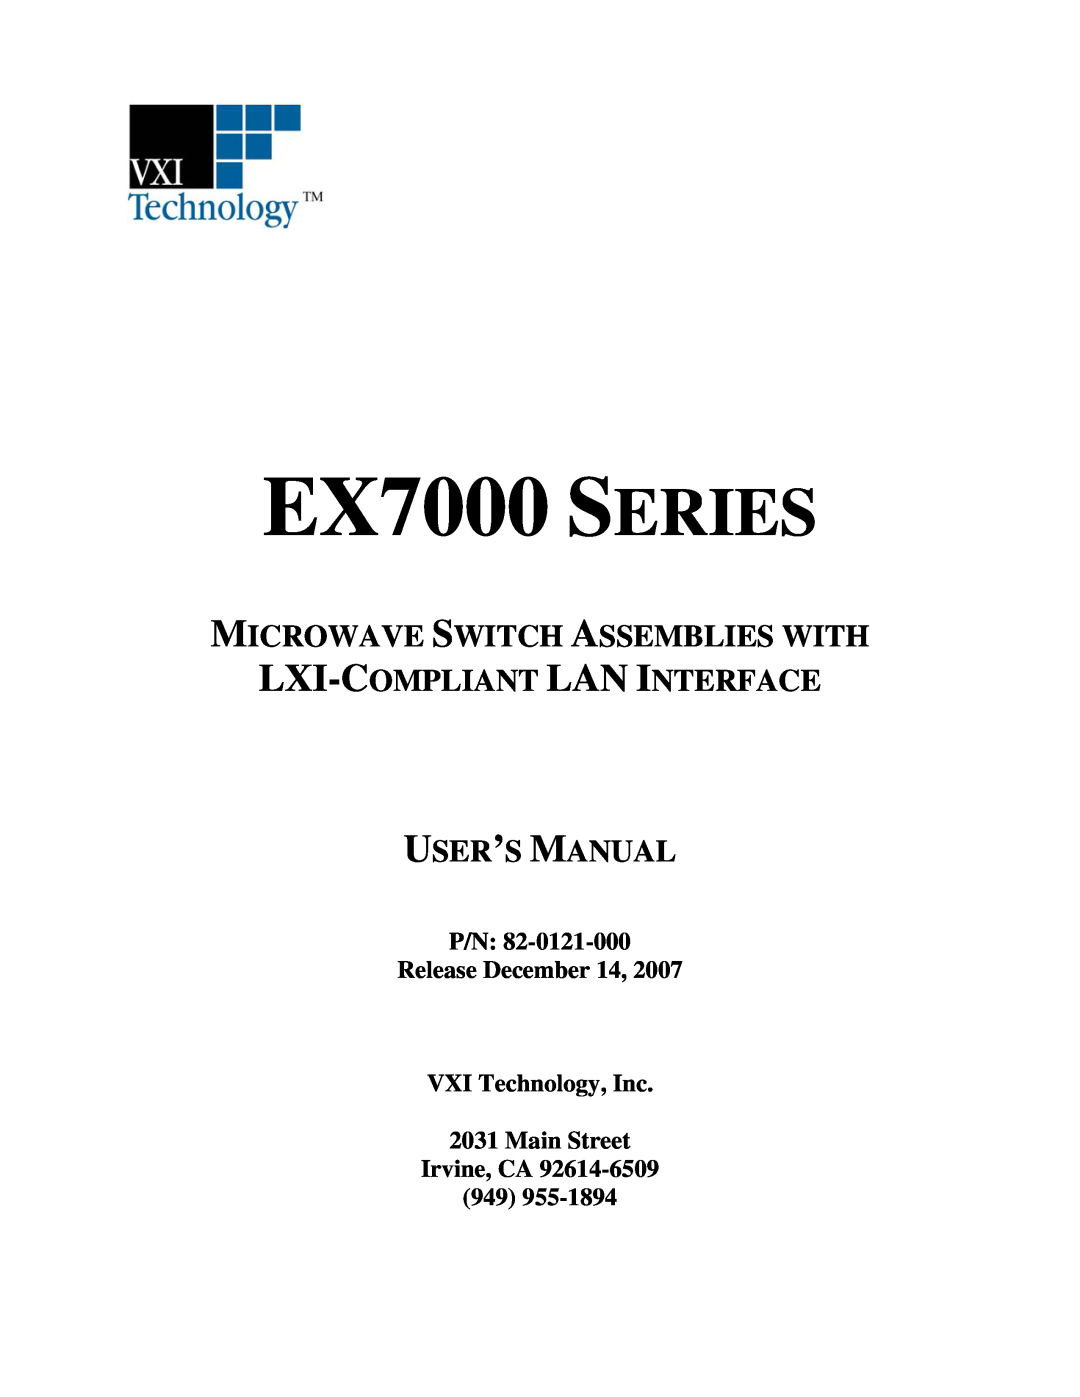 VXI user manual P/N Release December 14 VXI Technology, Inc 2031 Main Street, Irvine, CA 949, EX7000 SERIES 